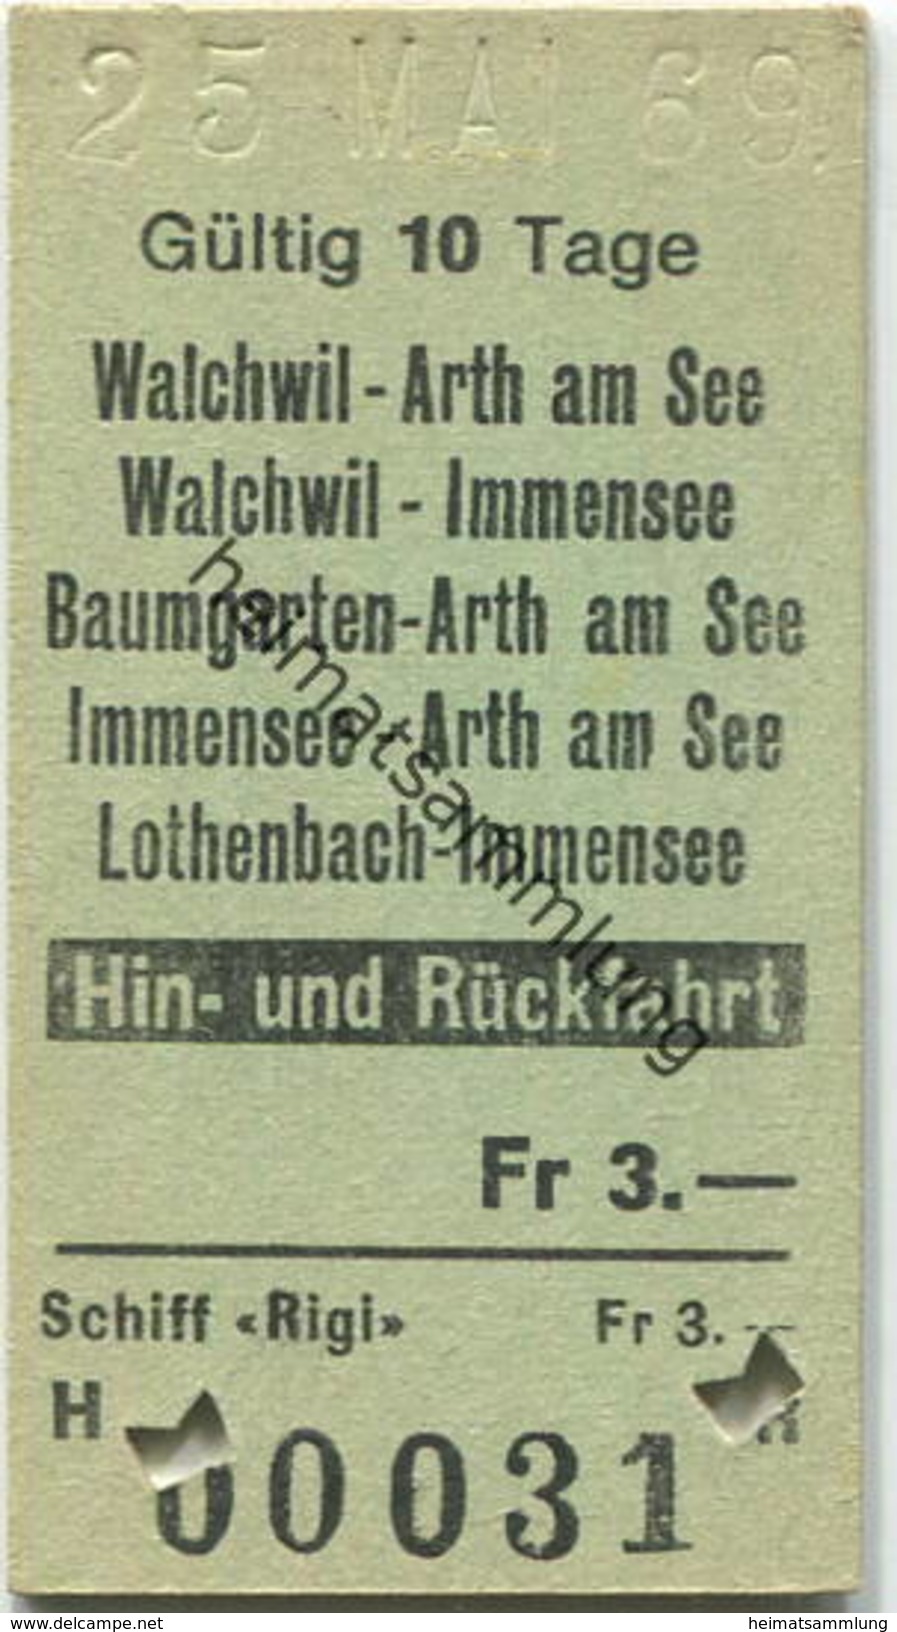 Schweiz - Schiff Rigi - Walchwil Lothenbach - Hin- Und Rückfahrt - Fahrkarte 1969 - Europe